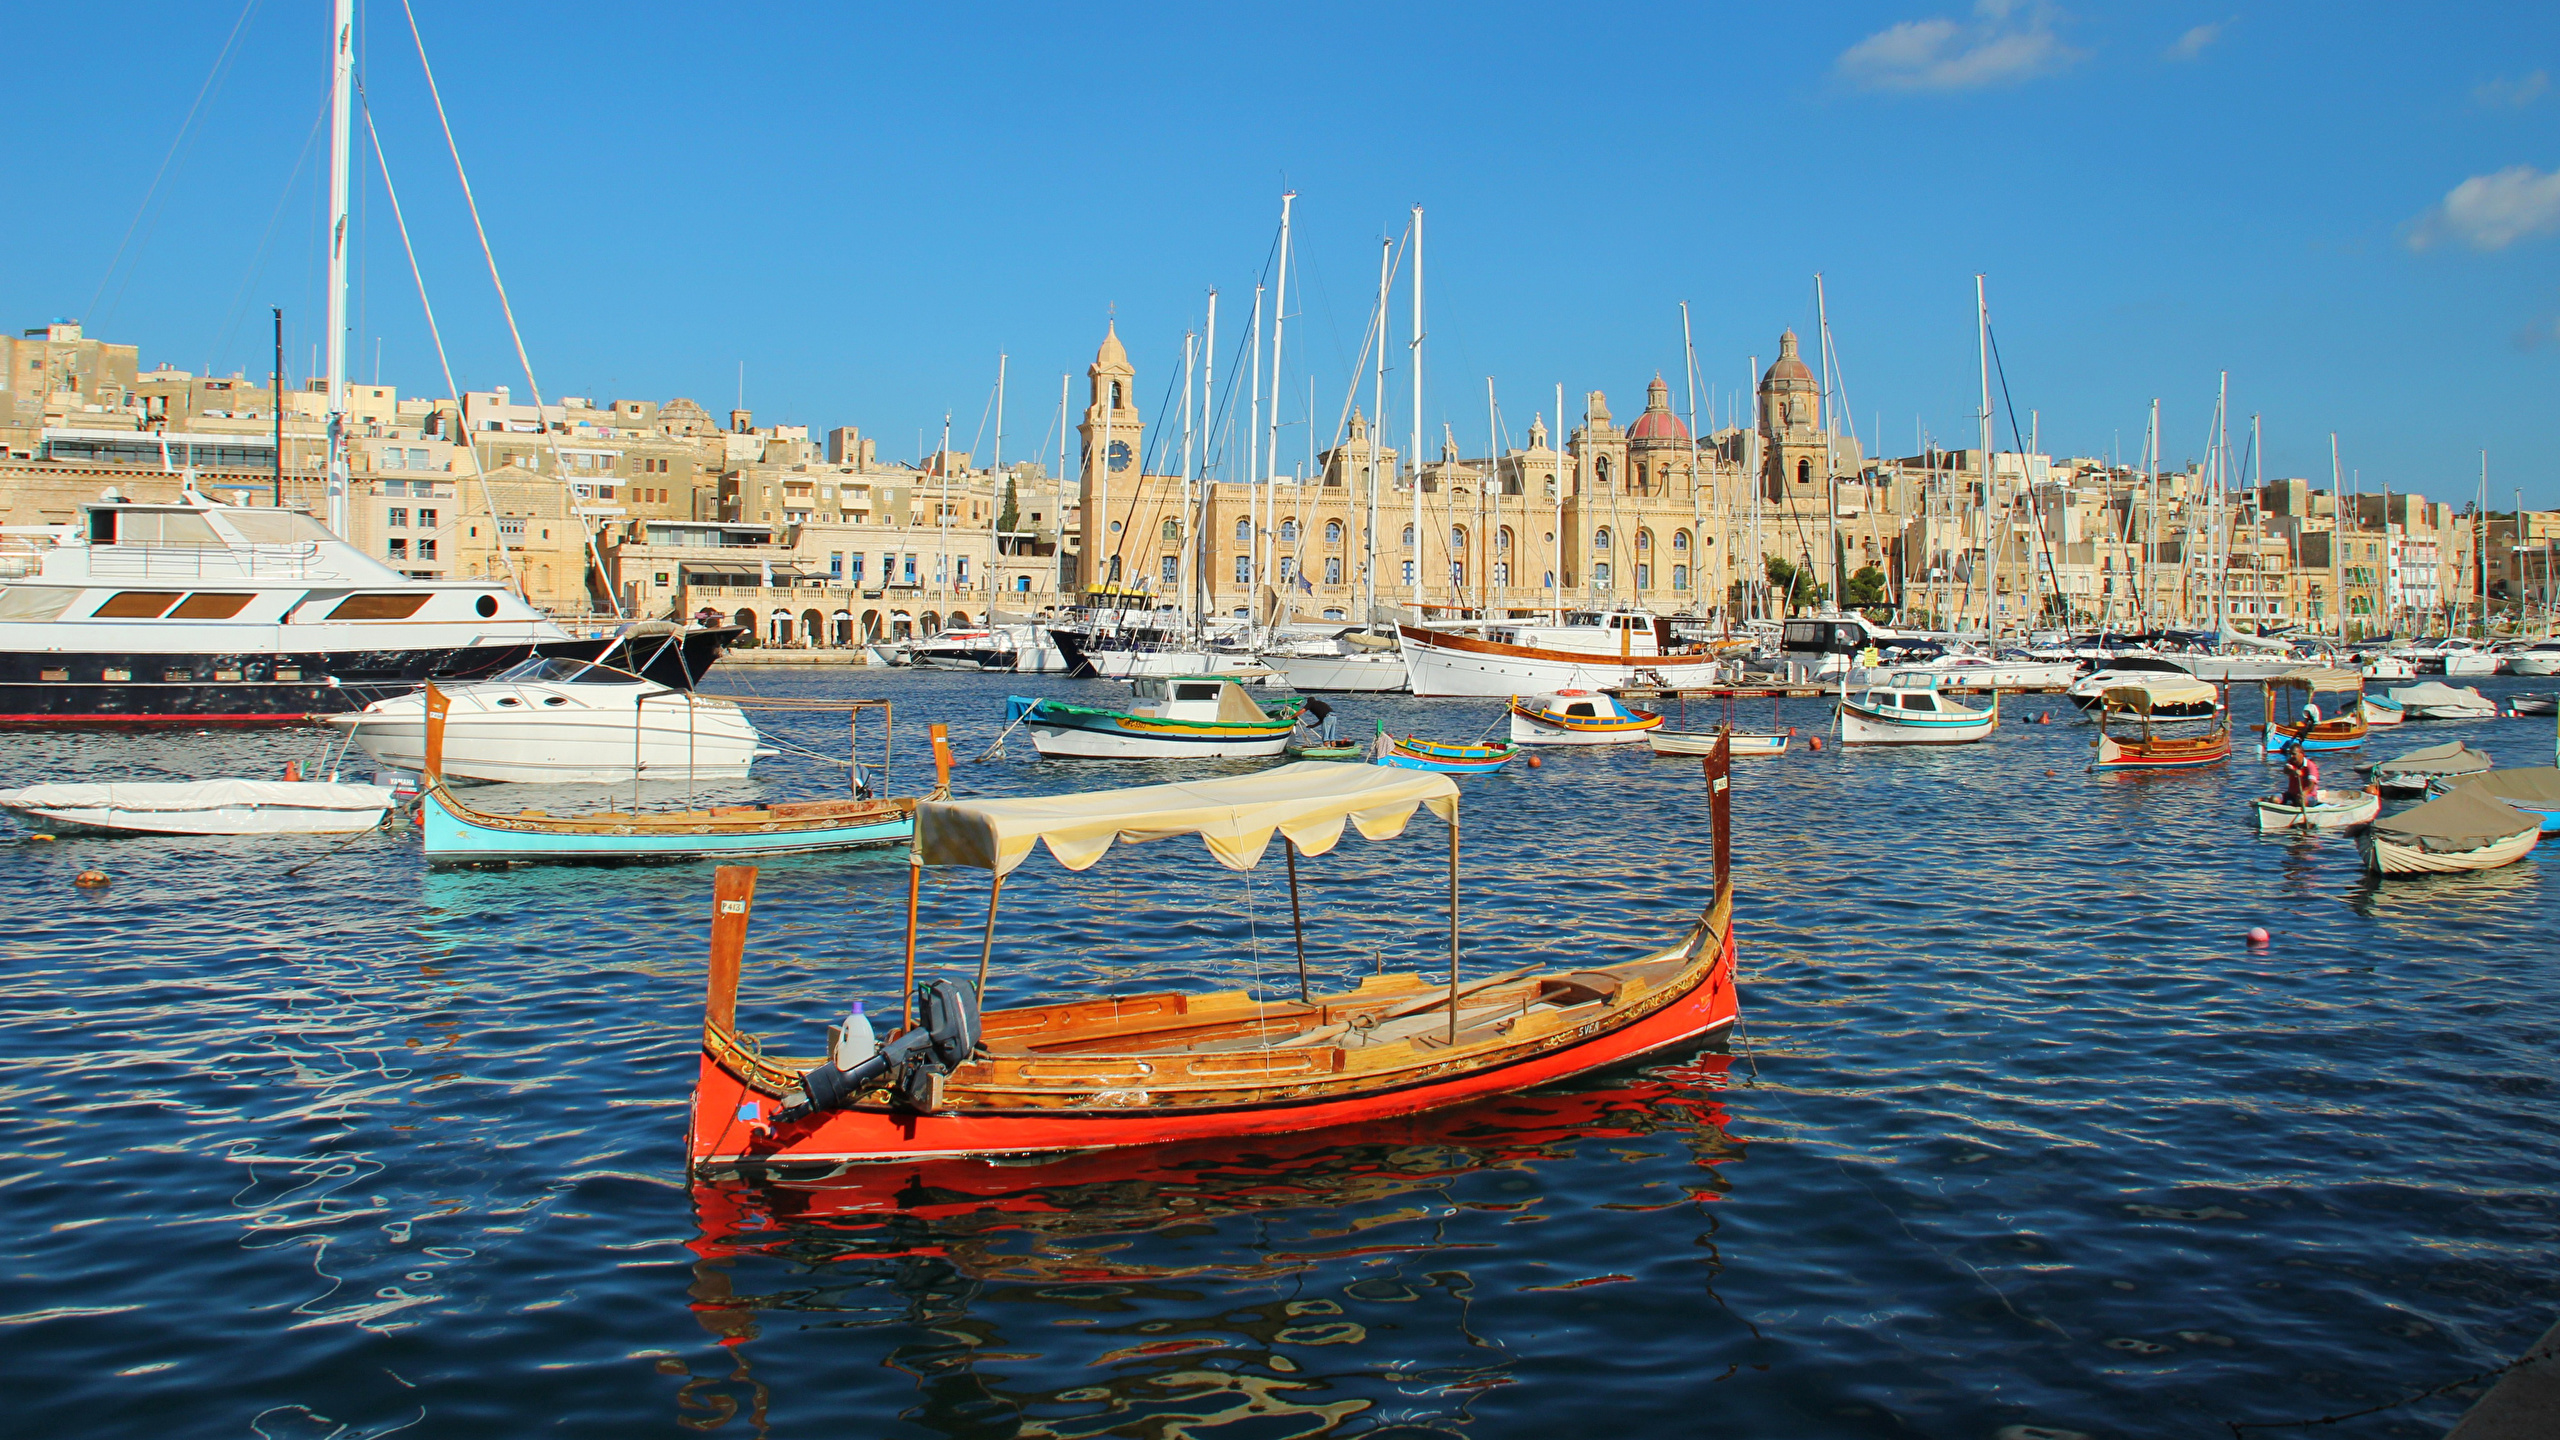 Image Malta Birgu Boats Cities Building